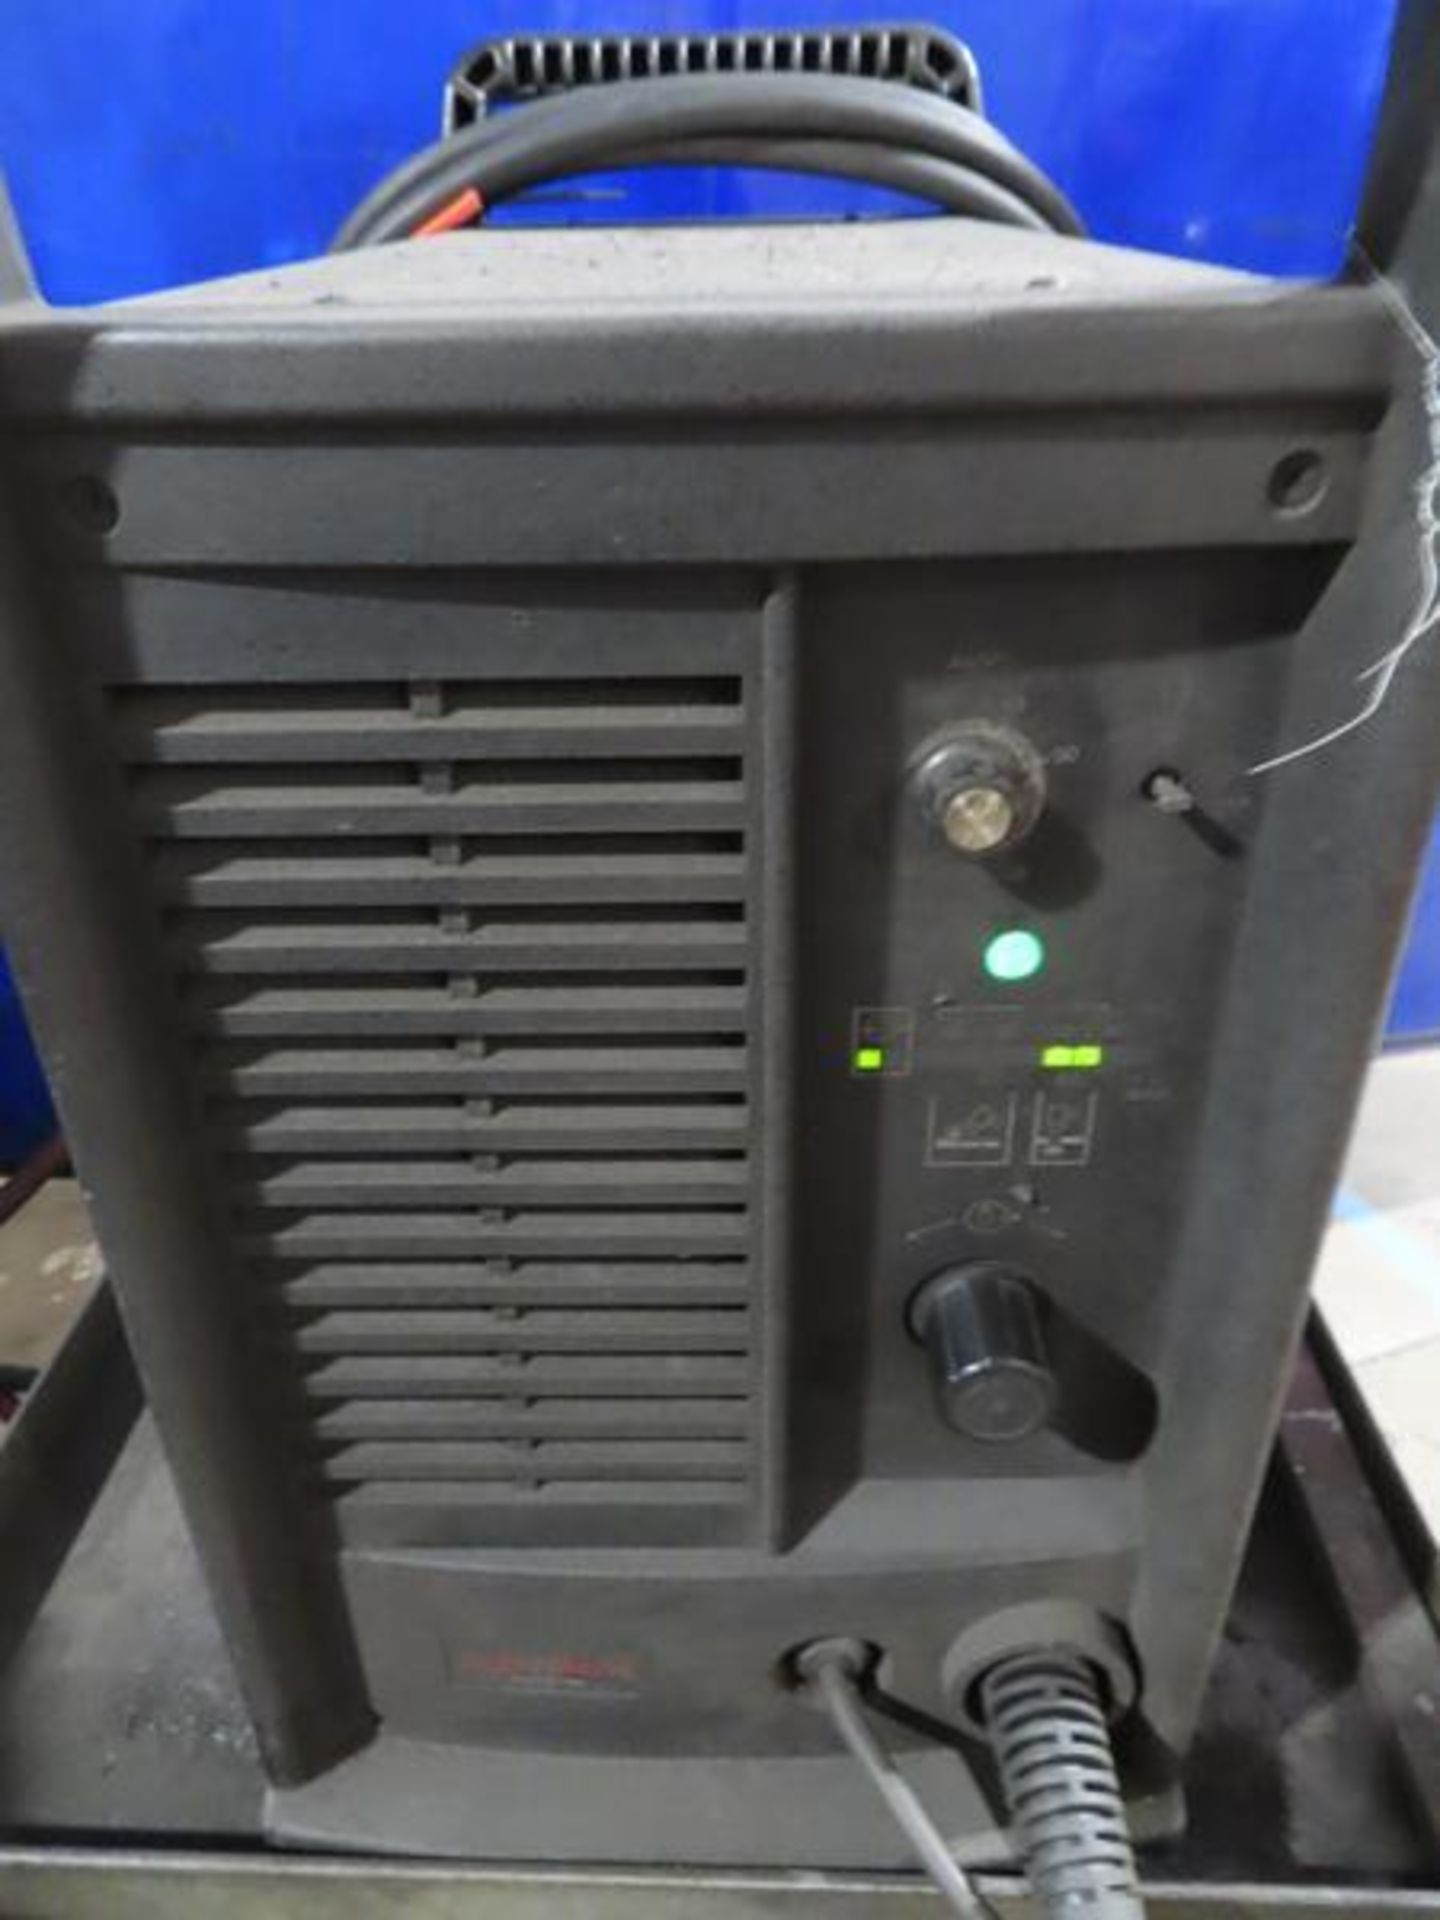 Hypertherm Powermax 1000 G3 Series Plasma Cutting System - Image 2 of 3